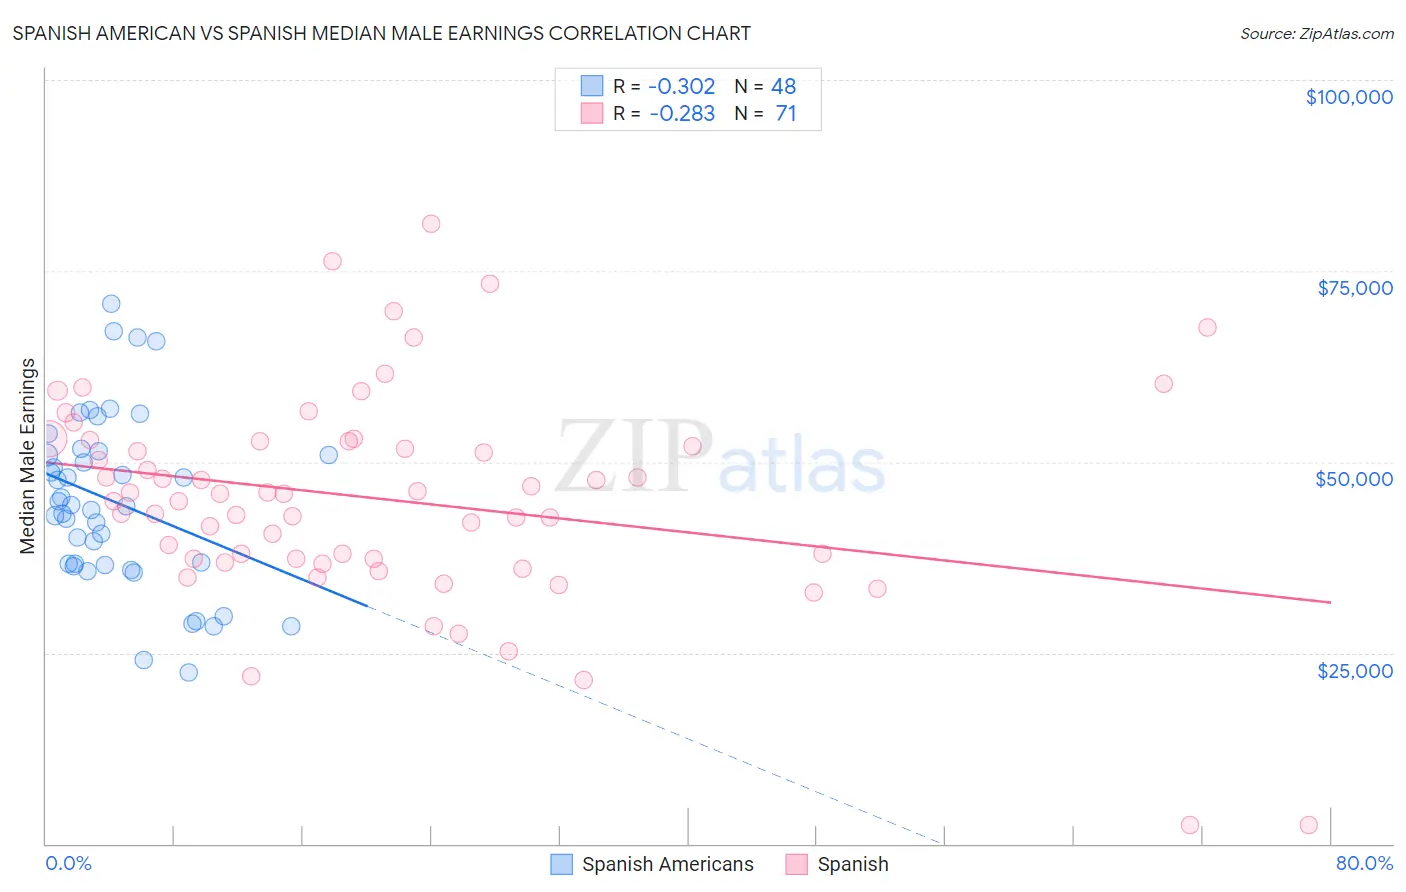 Spanish American vs Spanish Median Male Earnings